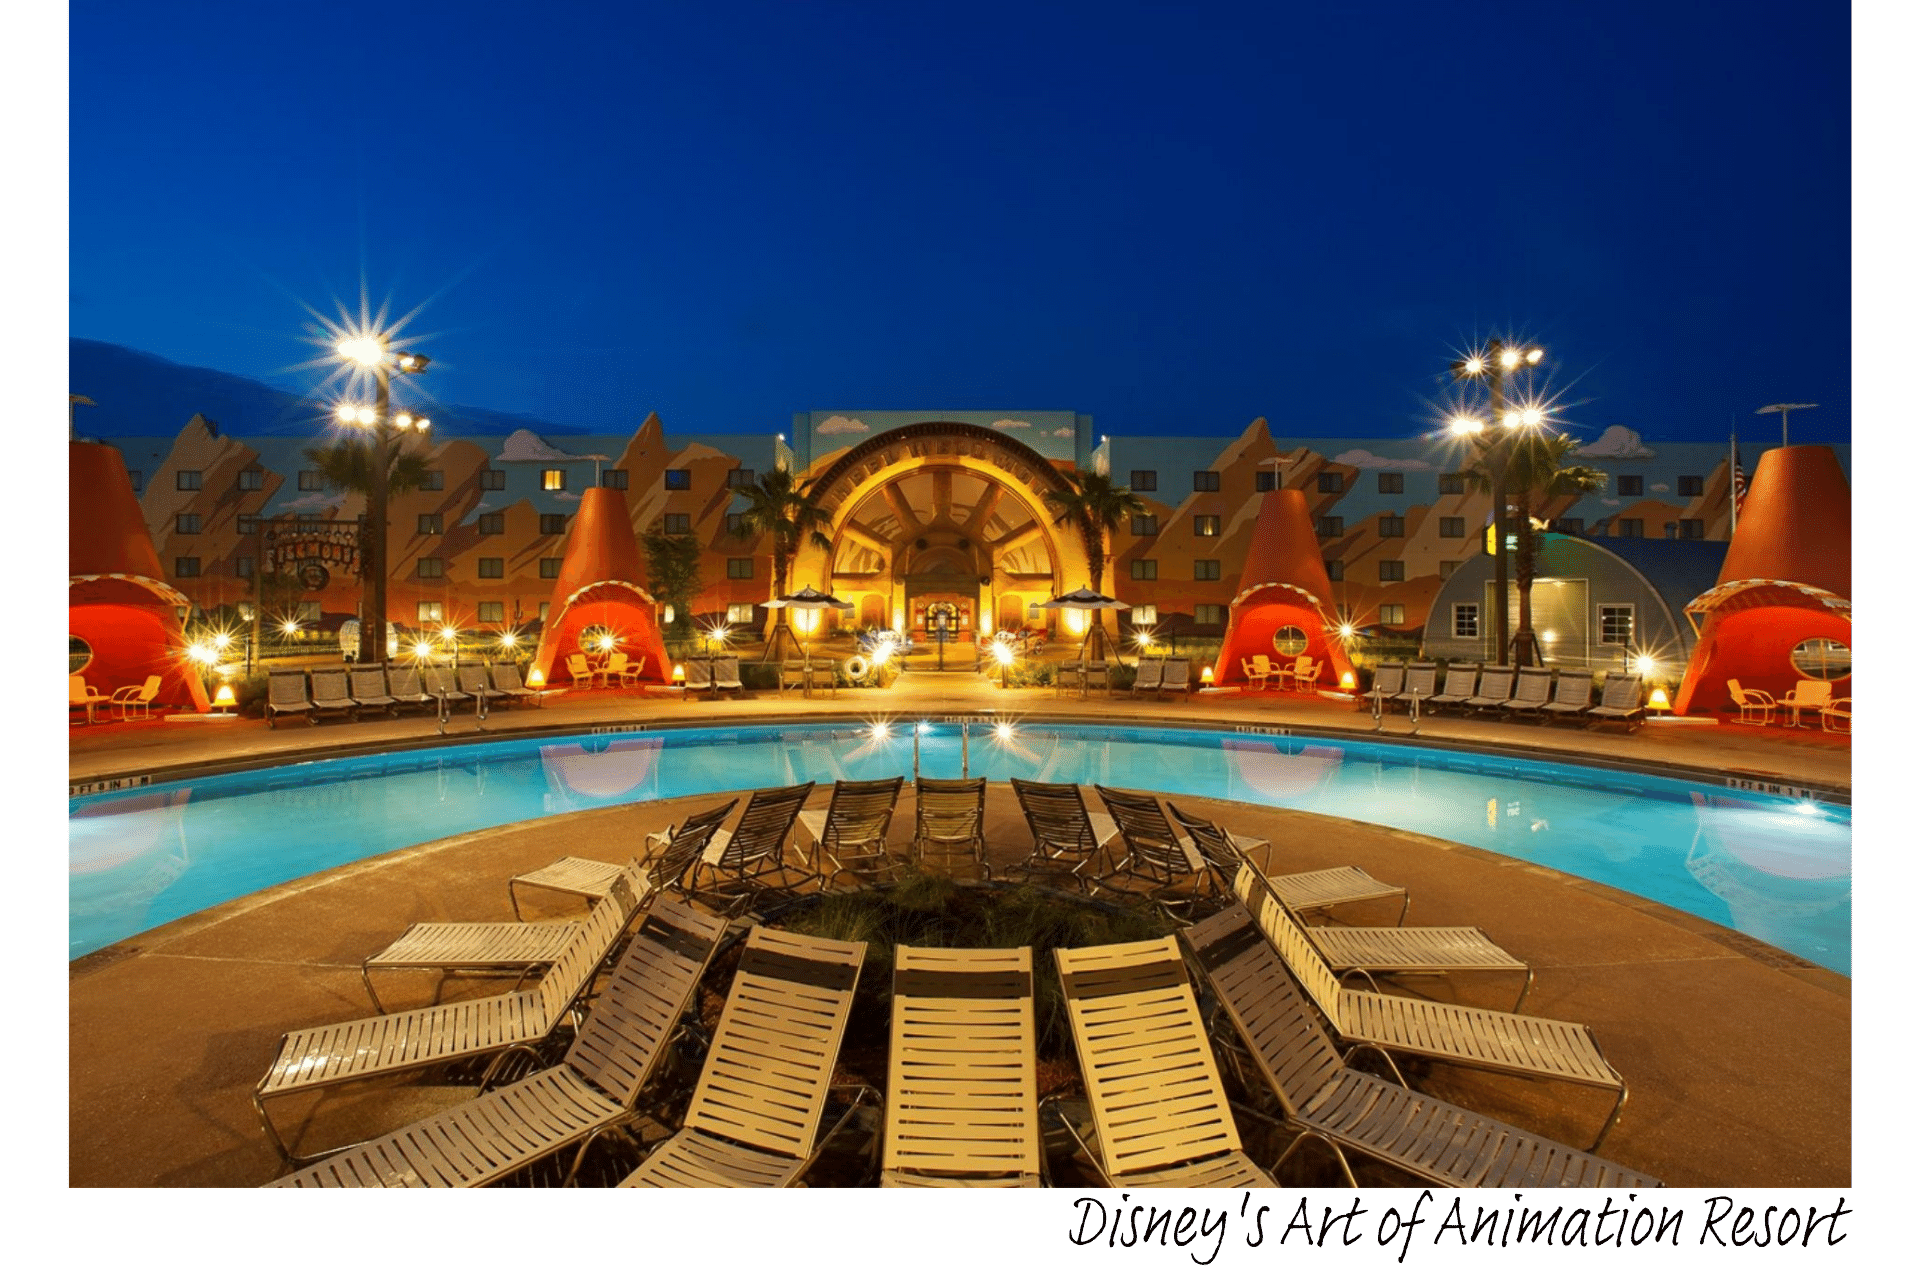 The pool at Disney's Art of Animation Resort at Walt Disney World Resort, Florida.